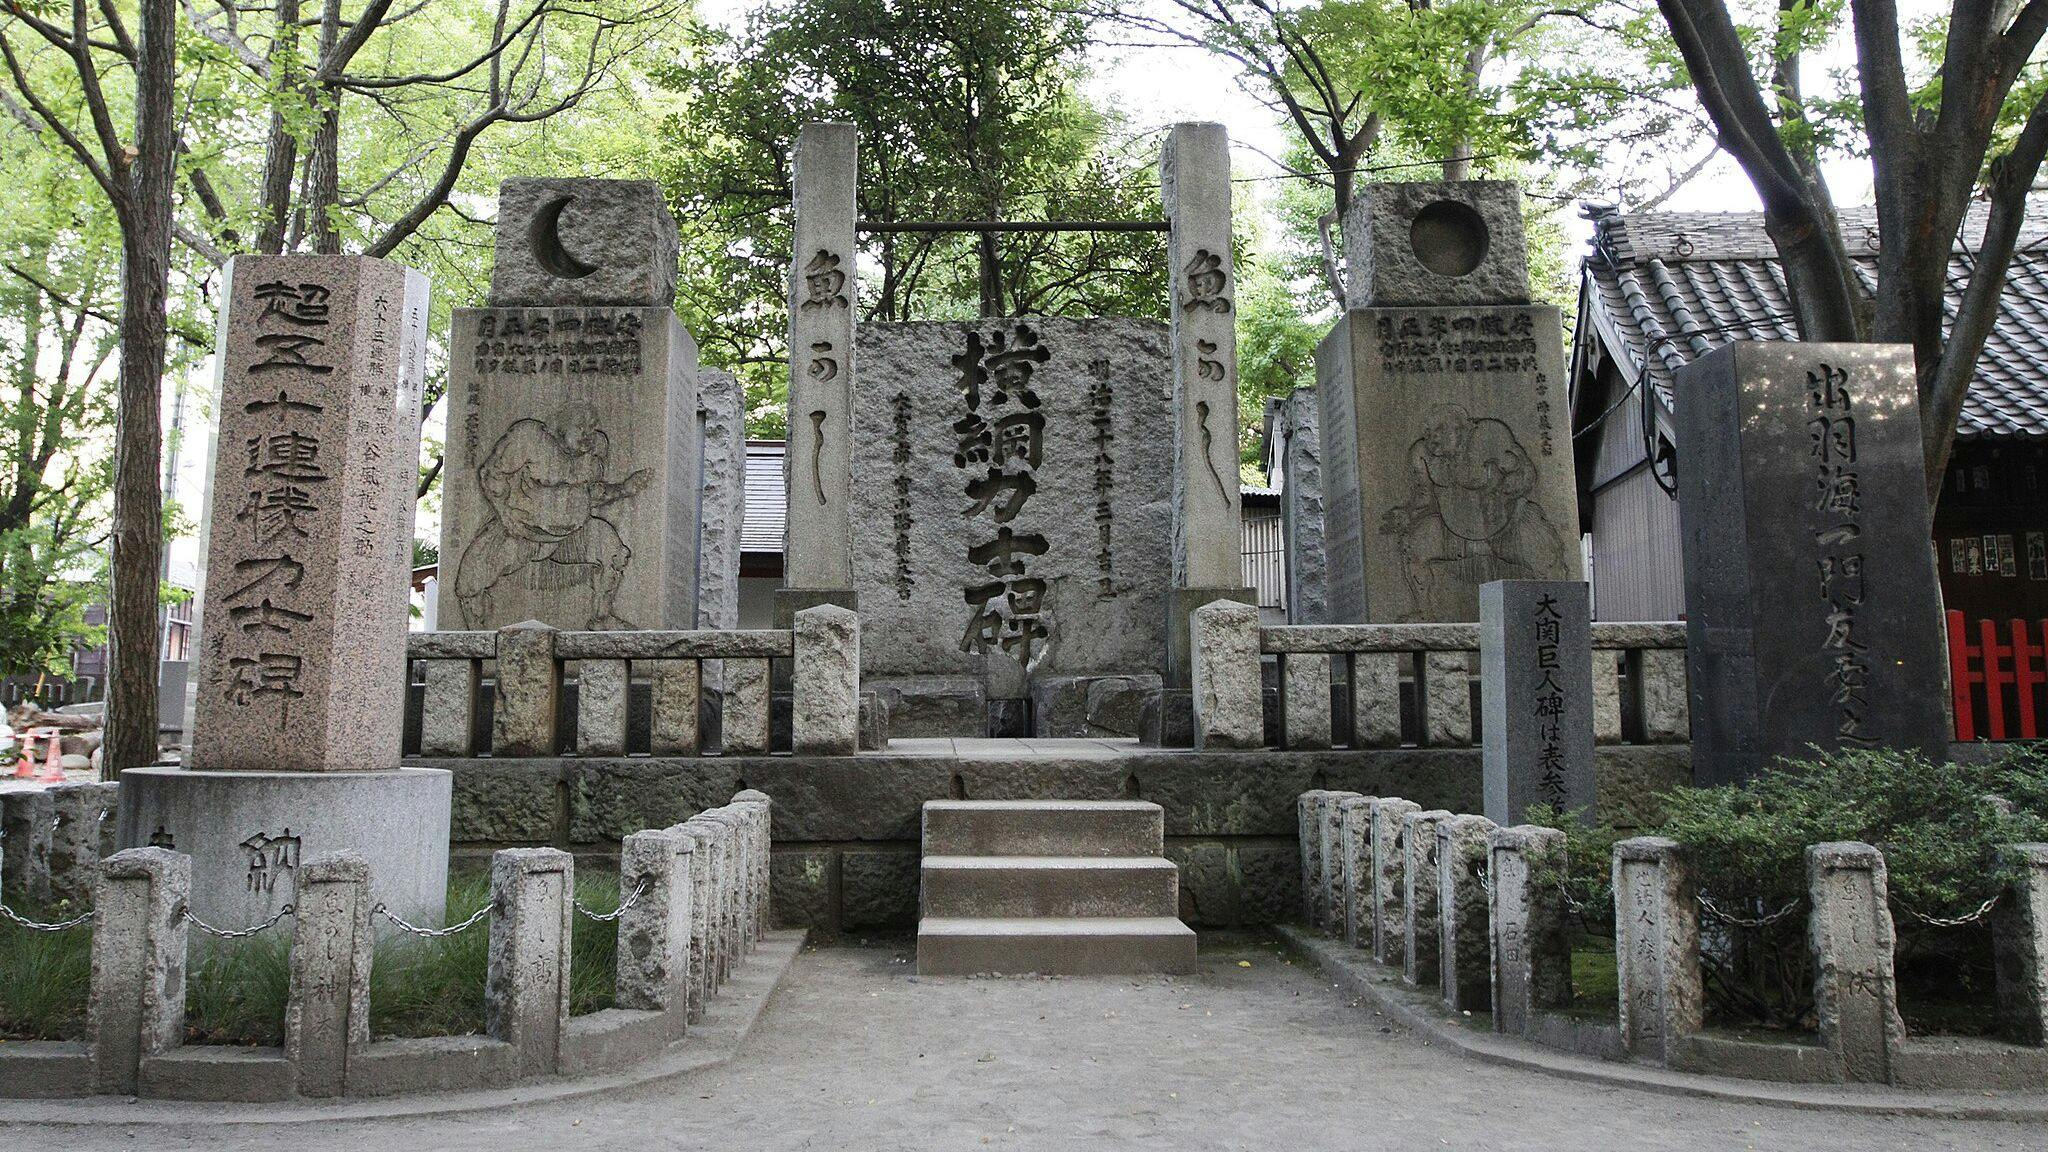 Yokozuna Stone at the Tomioka Hachiman Shrine